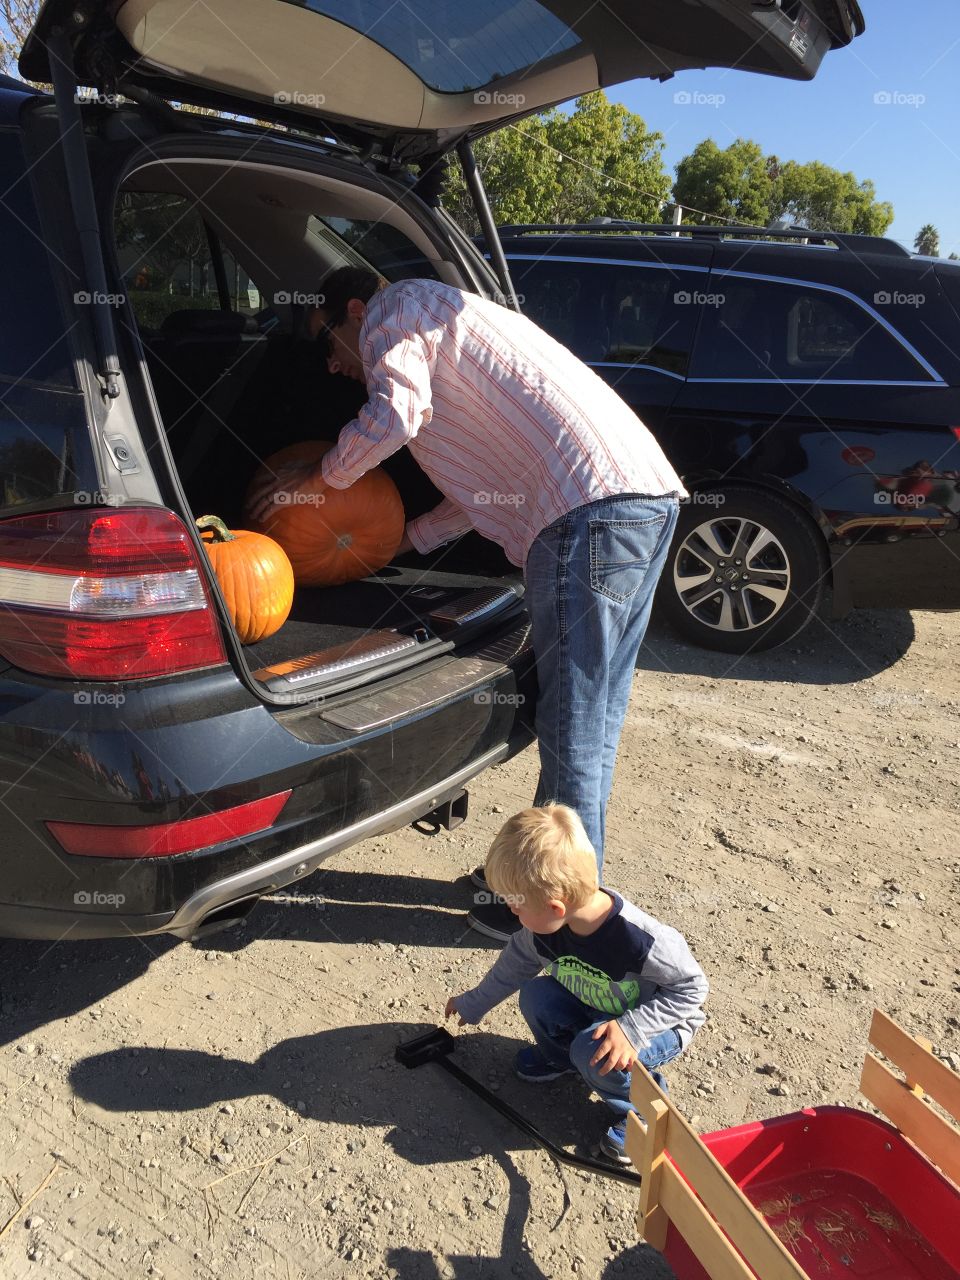 Two pumpkins in trunk